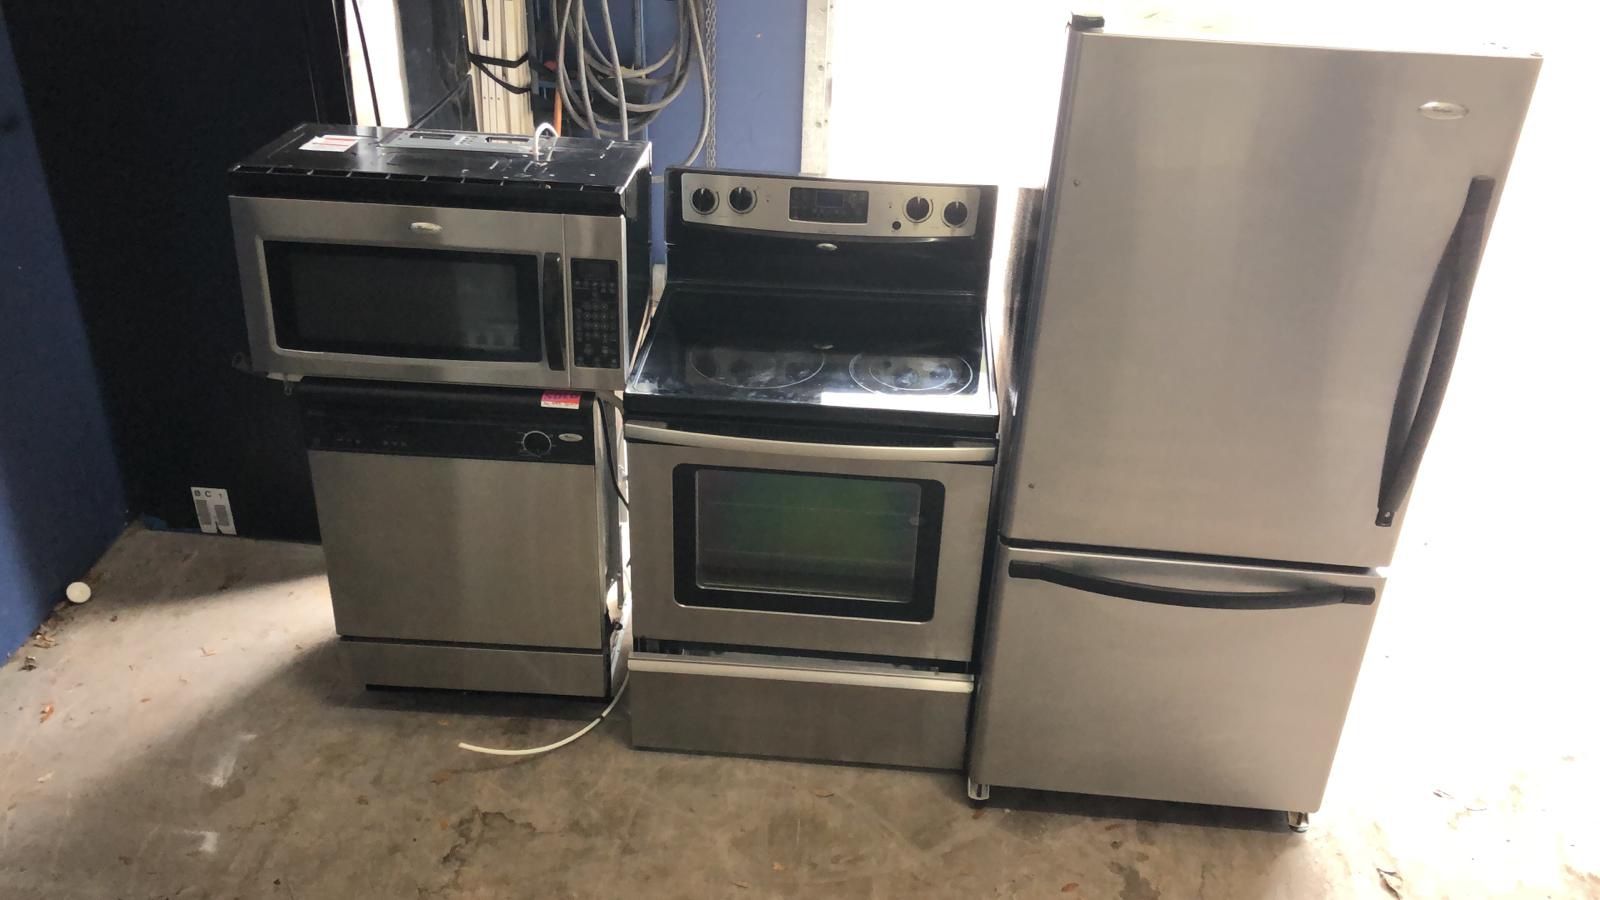 Bottom freezer kitchen appliance set